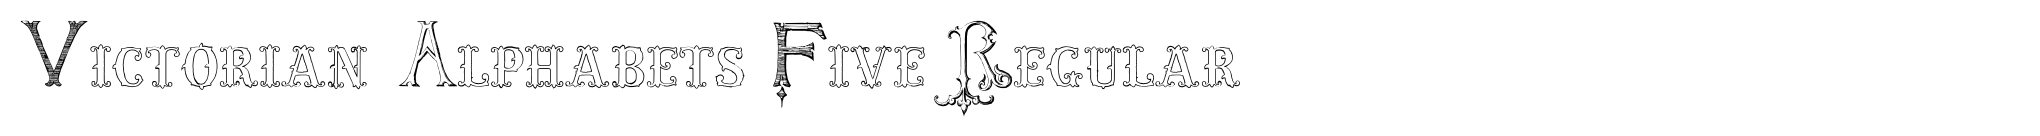 Victorian Alphabets Five Regular image